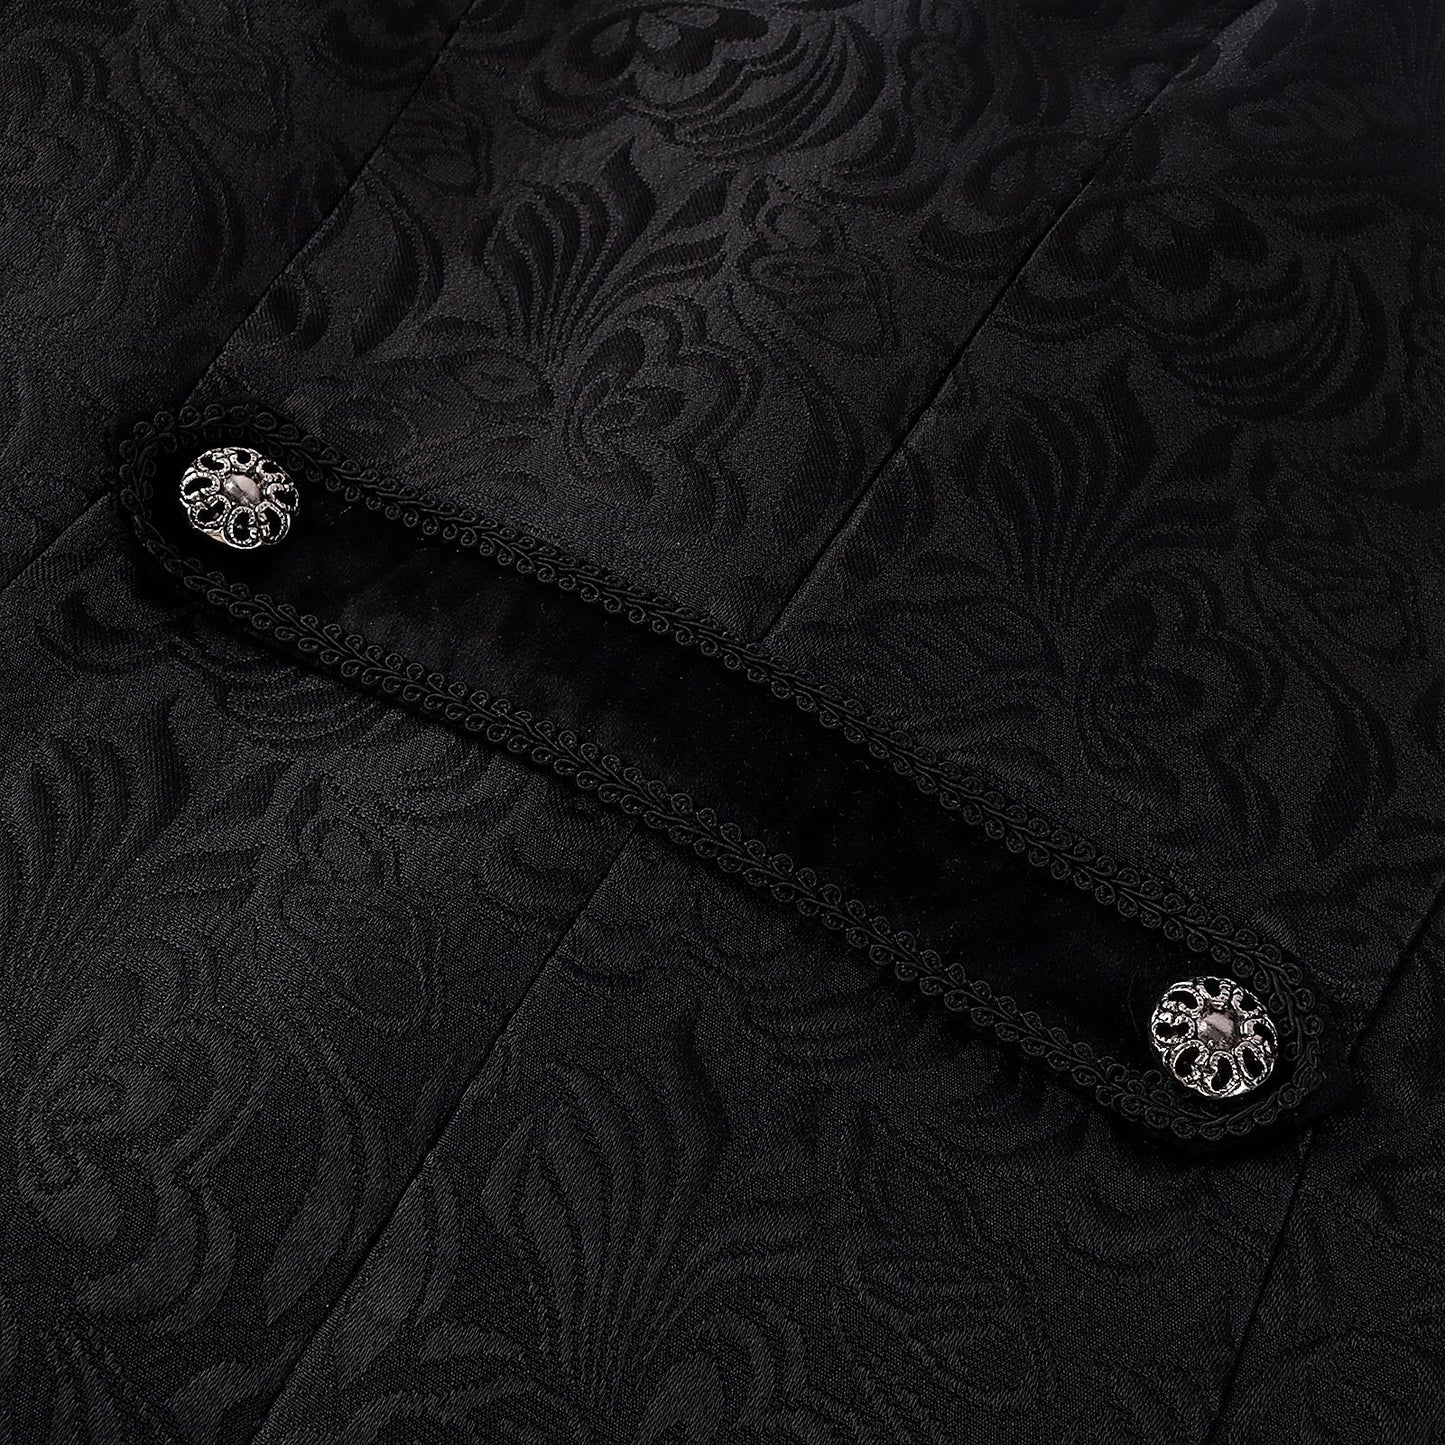 Halloween Black Men's Jacquard Jacket 1800S Regency Gothic Steampunk Long Outfit